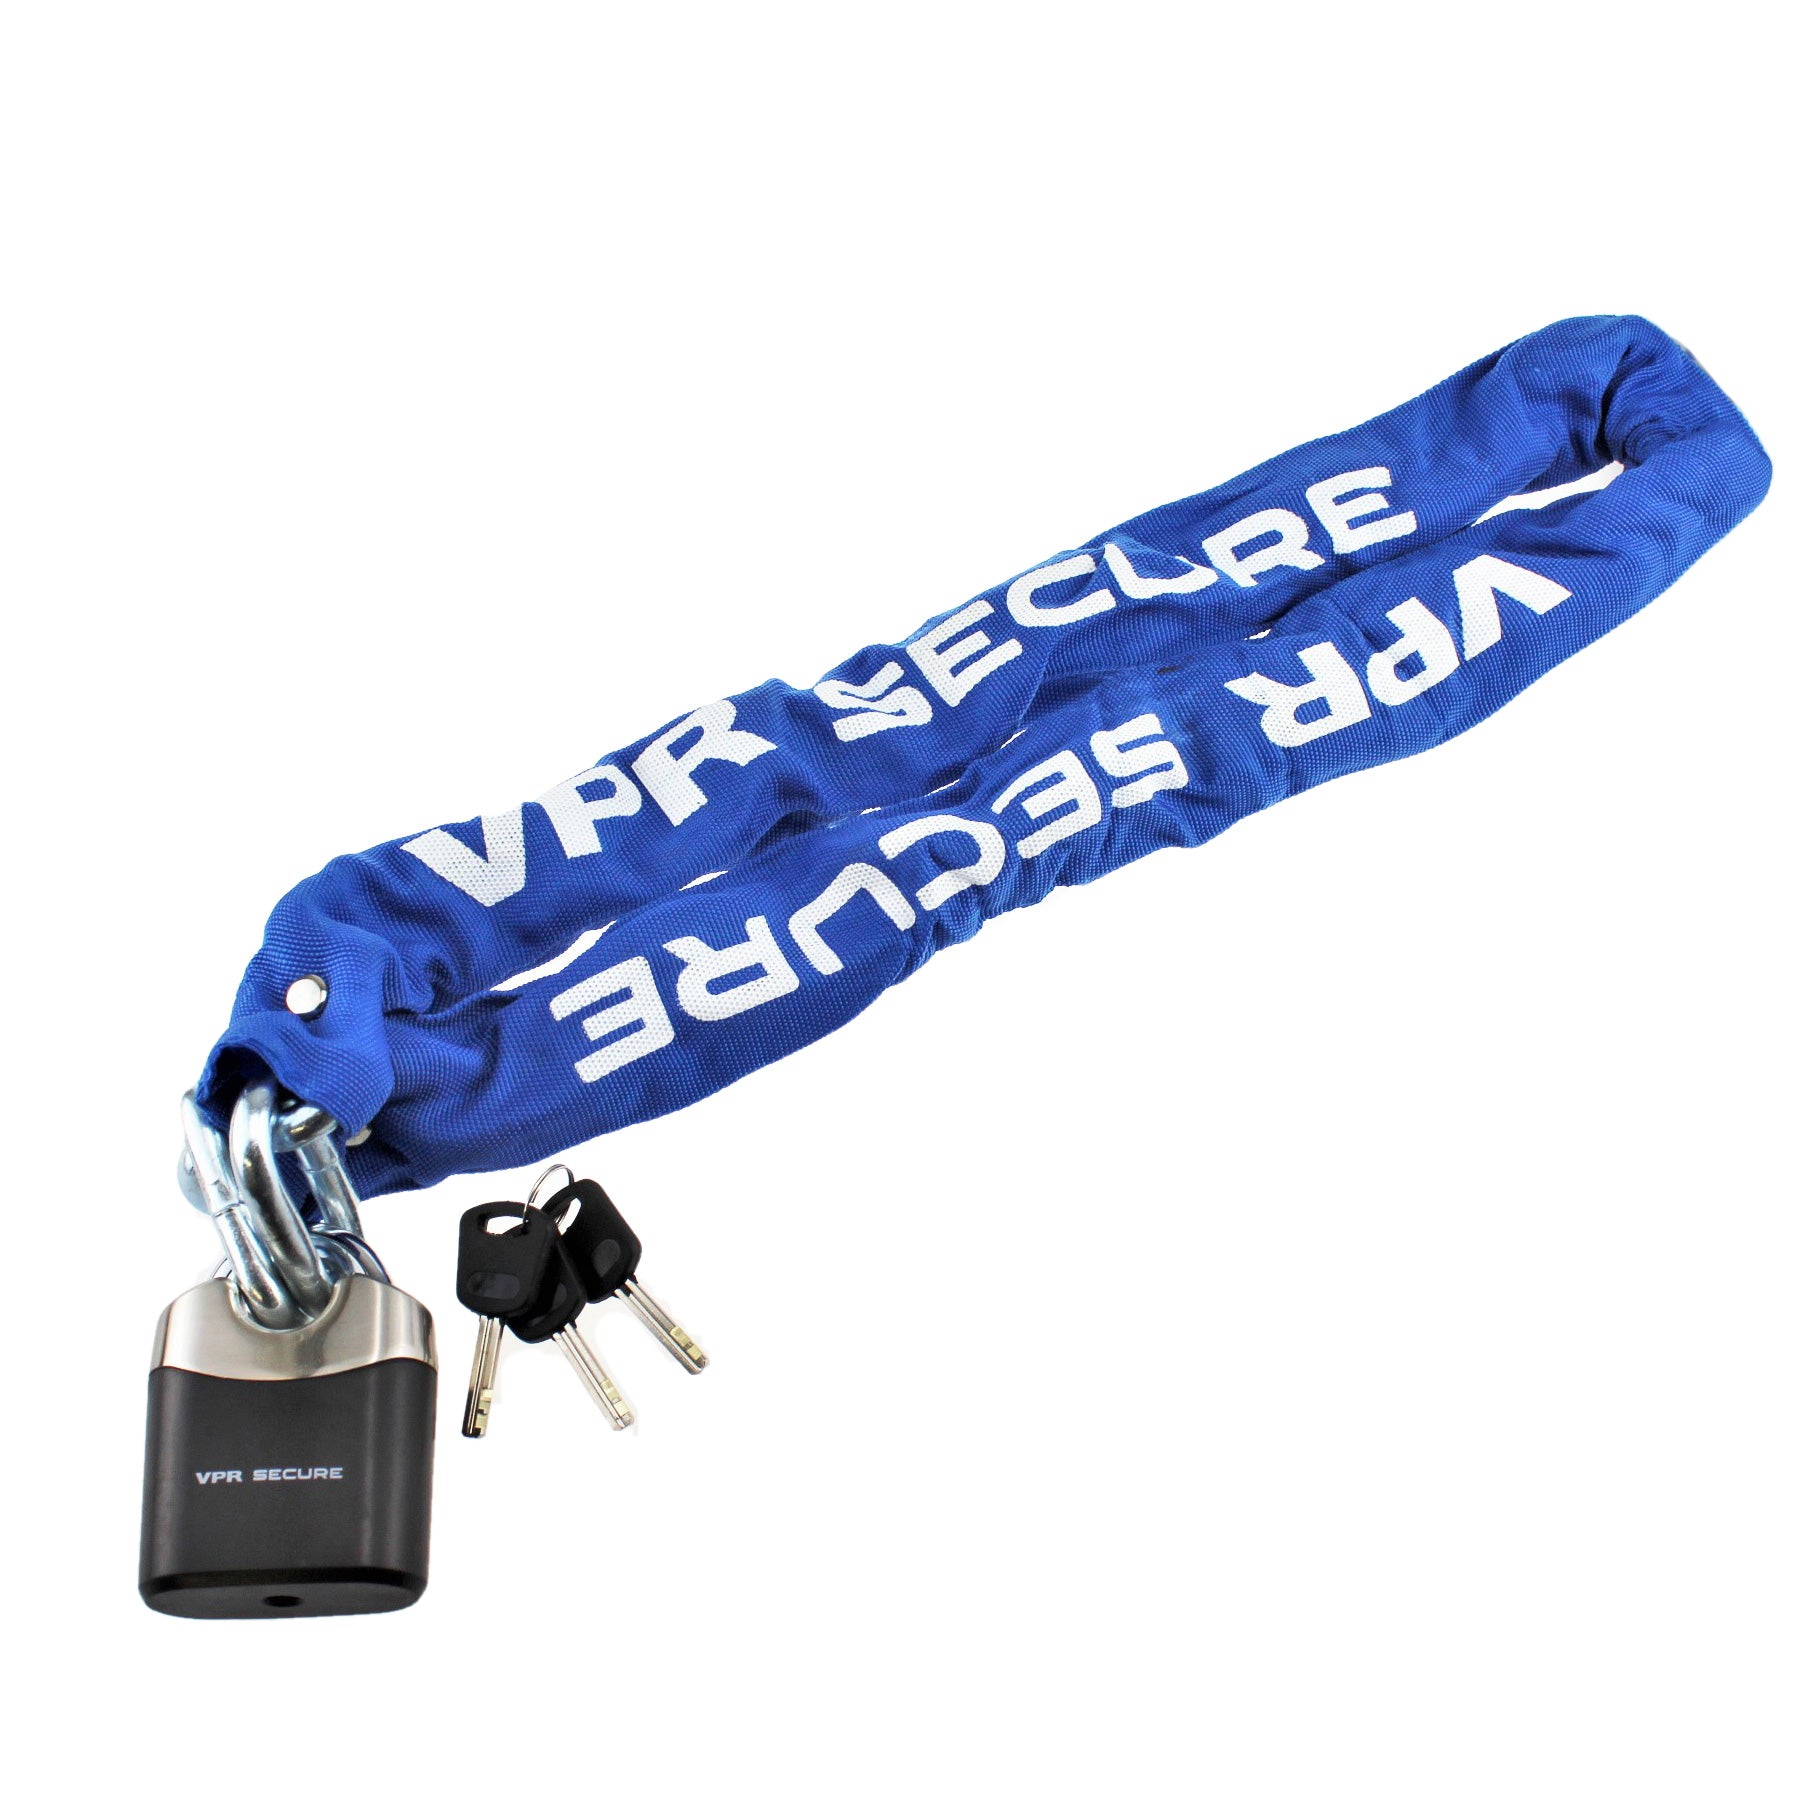 VPR SECURE SABRE CHAIN LOCK 1.8M - BLUE